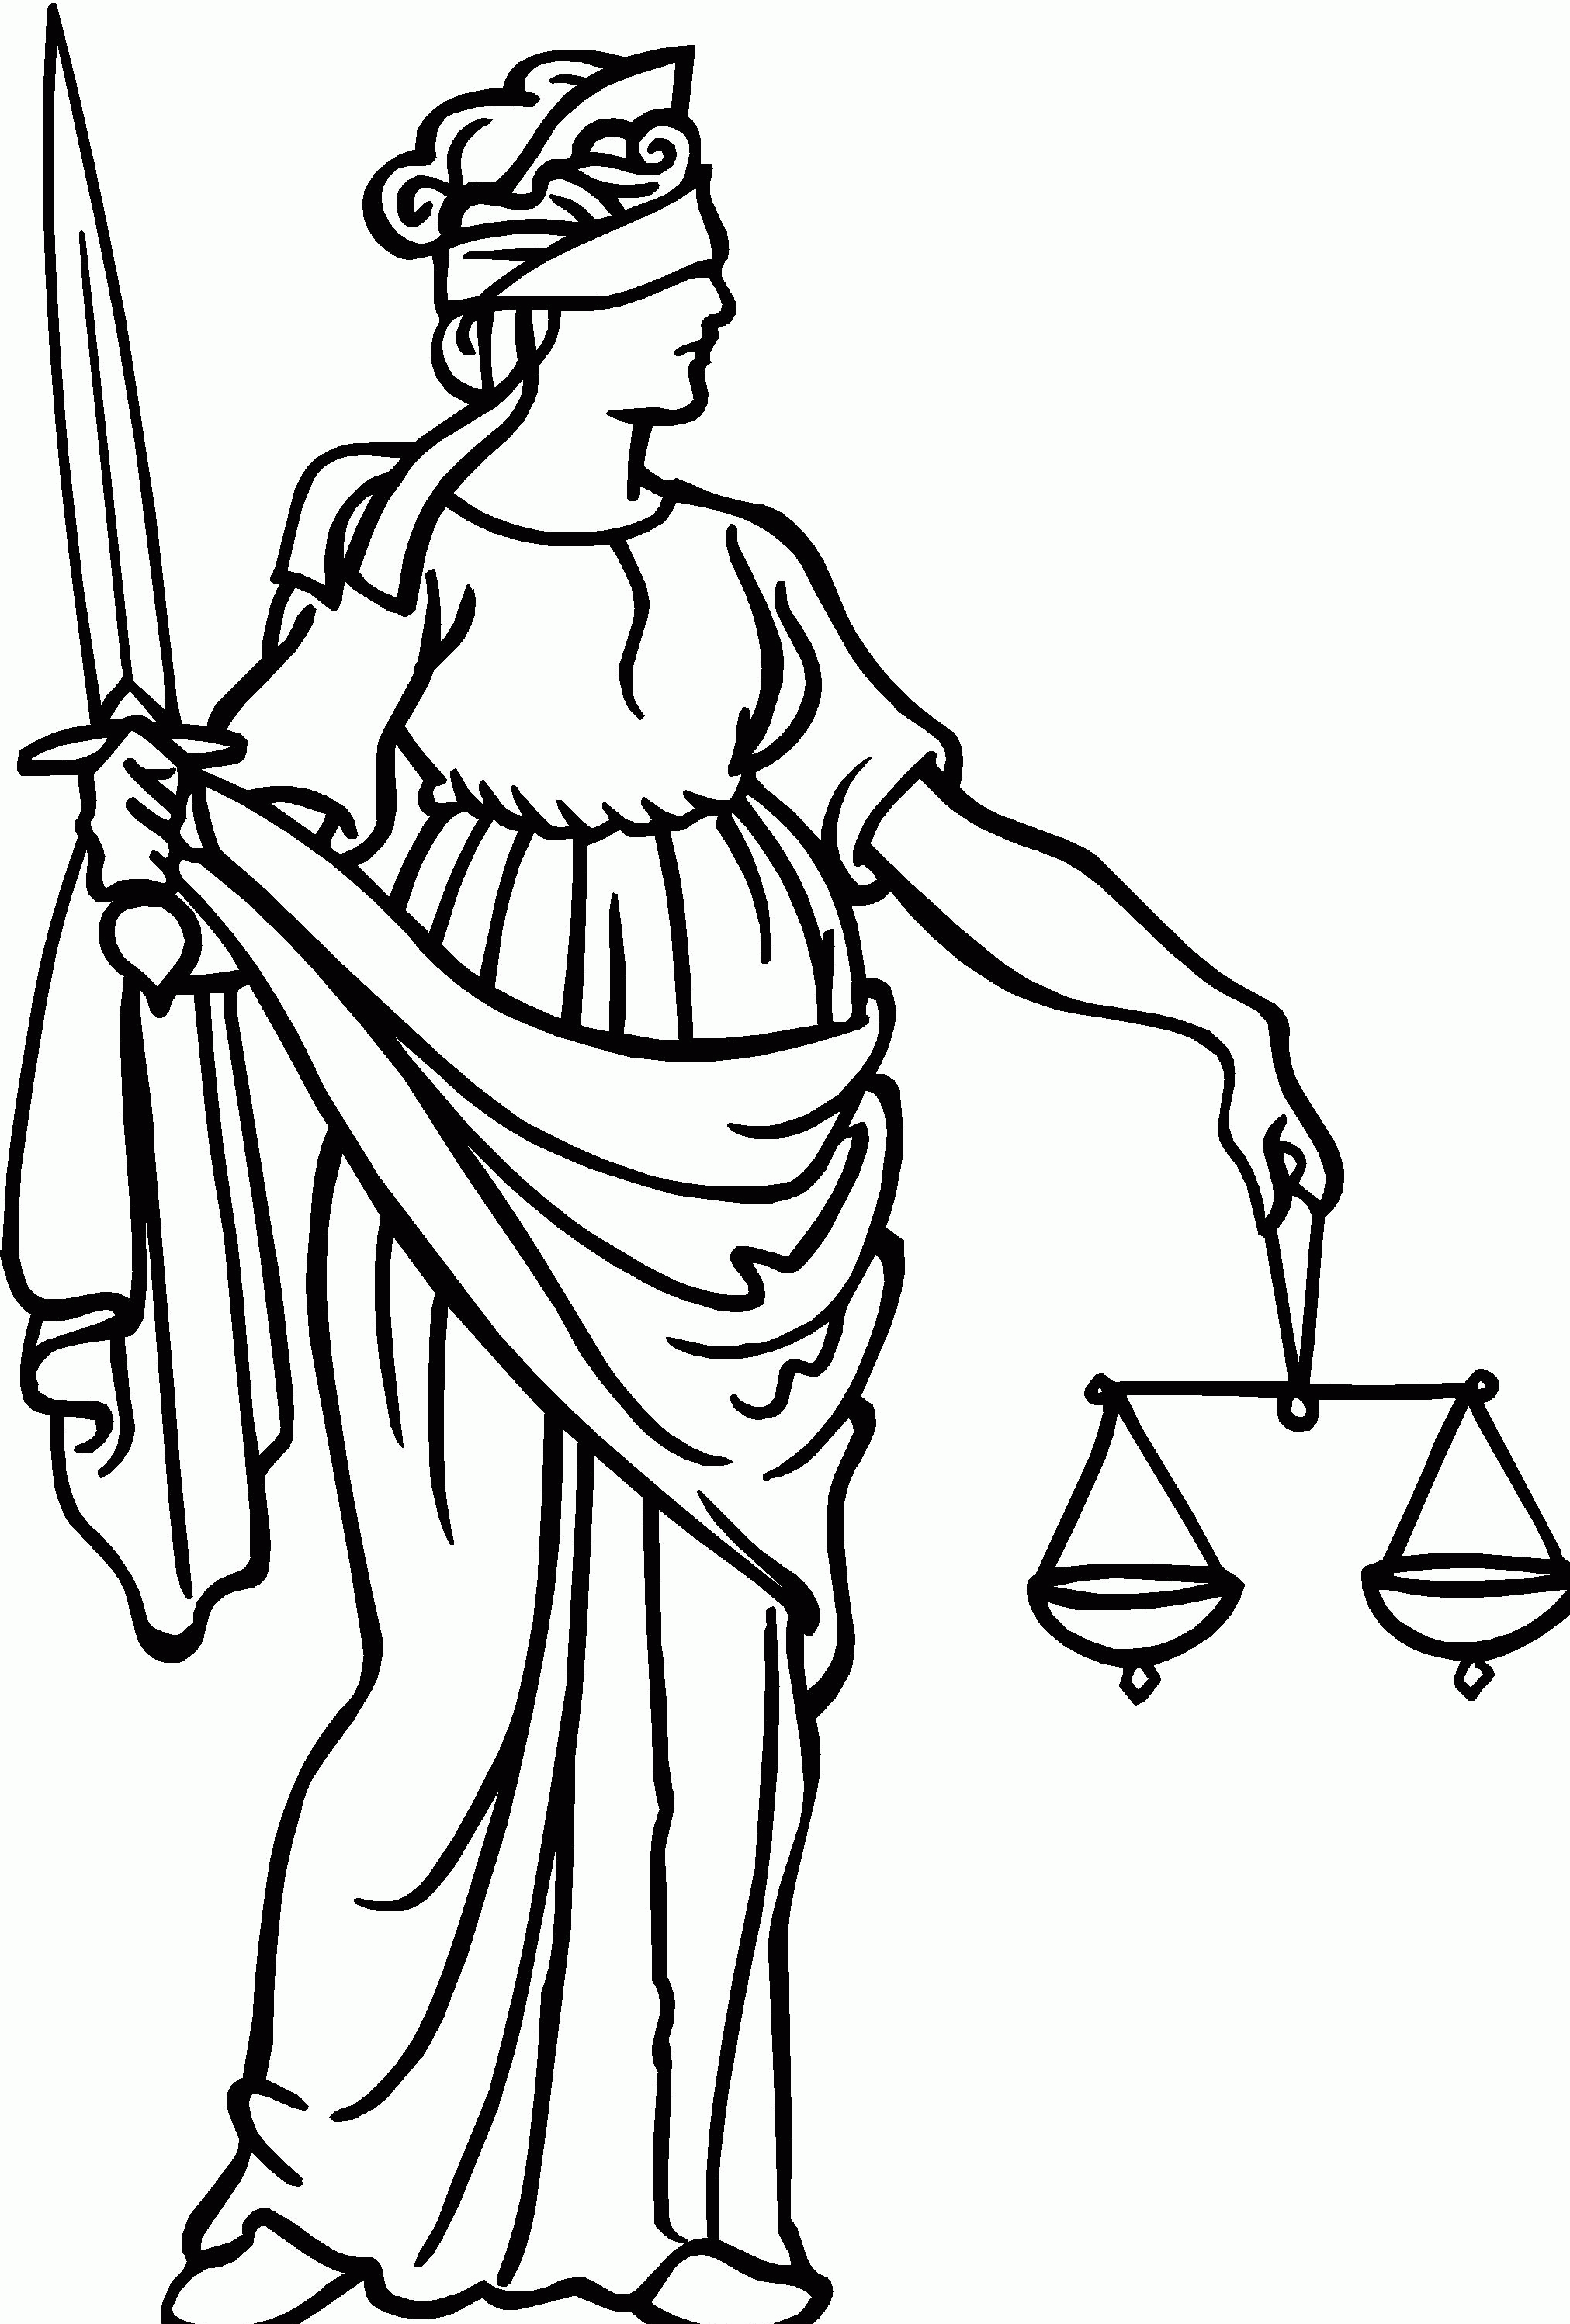 Фемида, как символ справедливости федерального суда